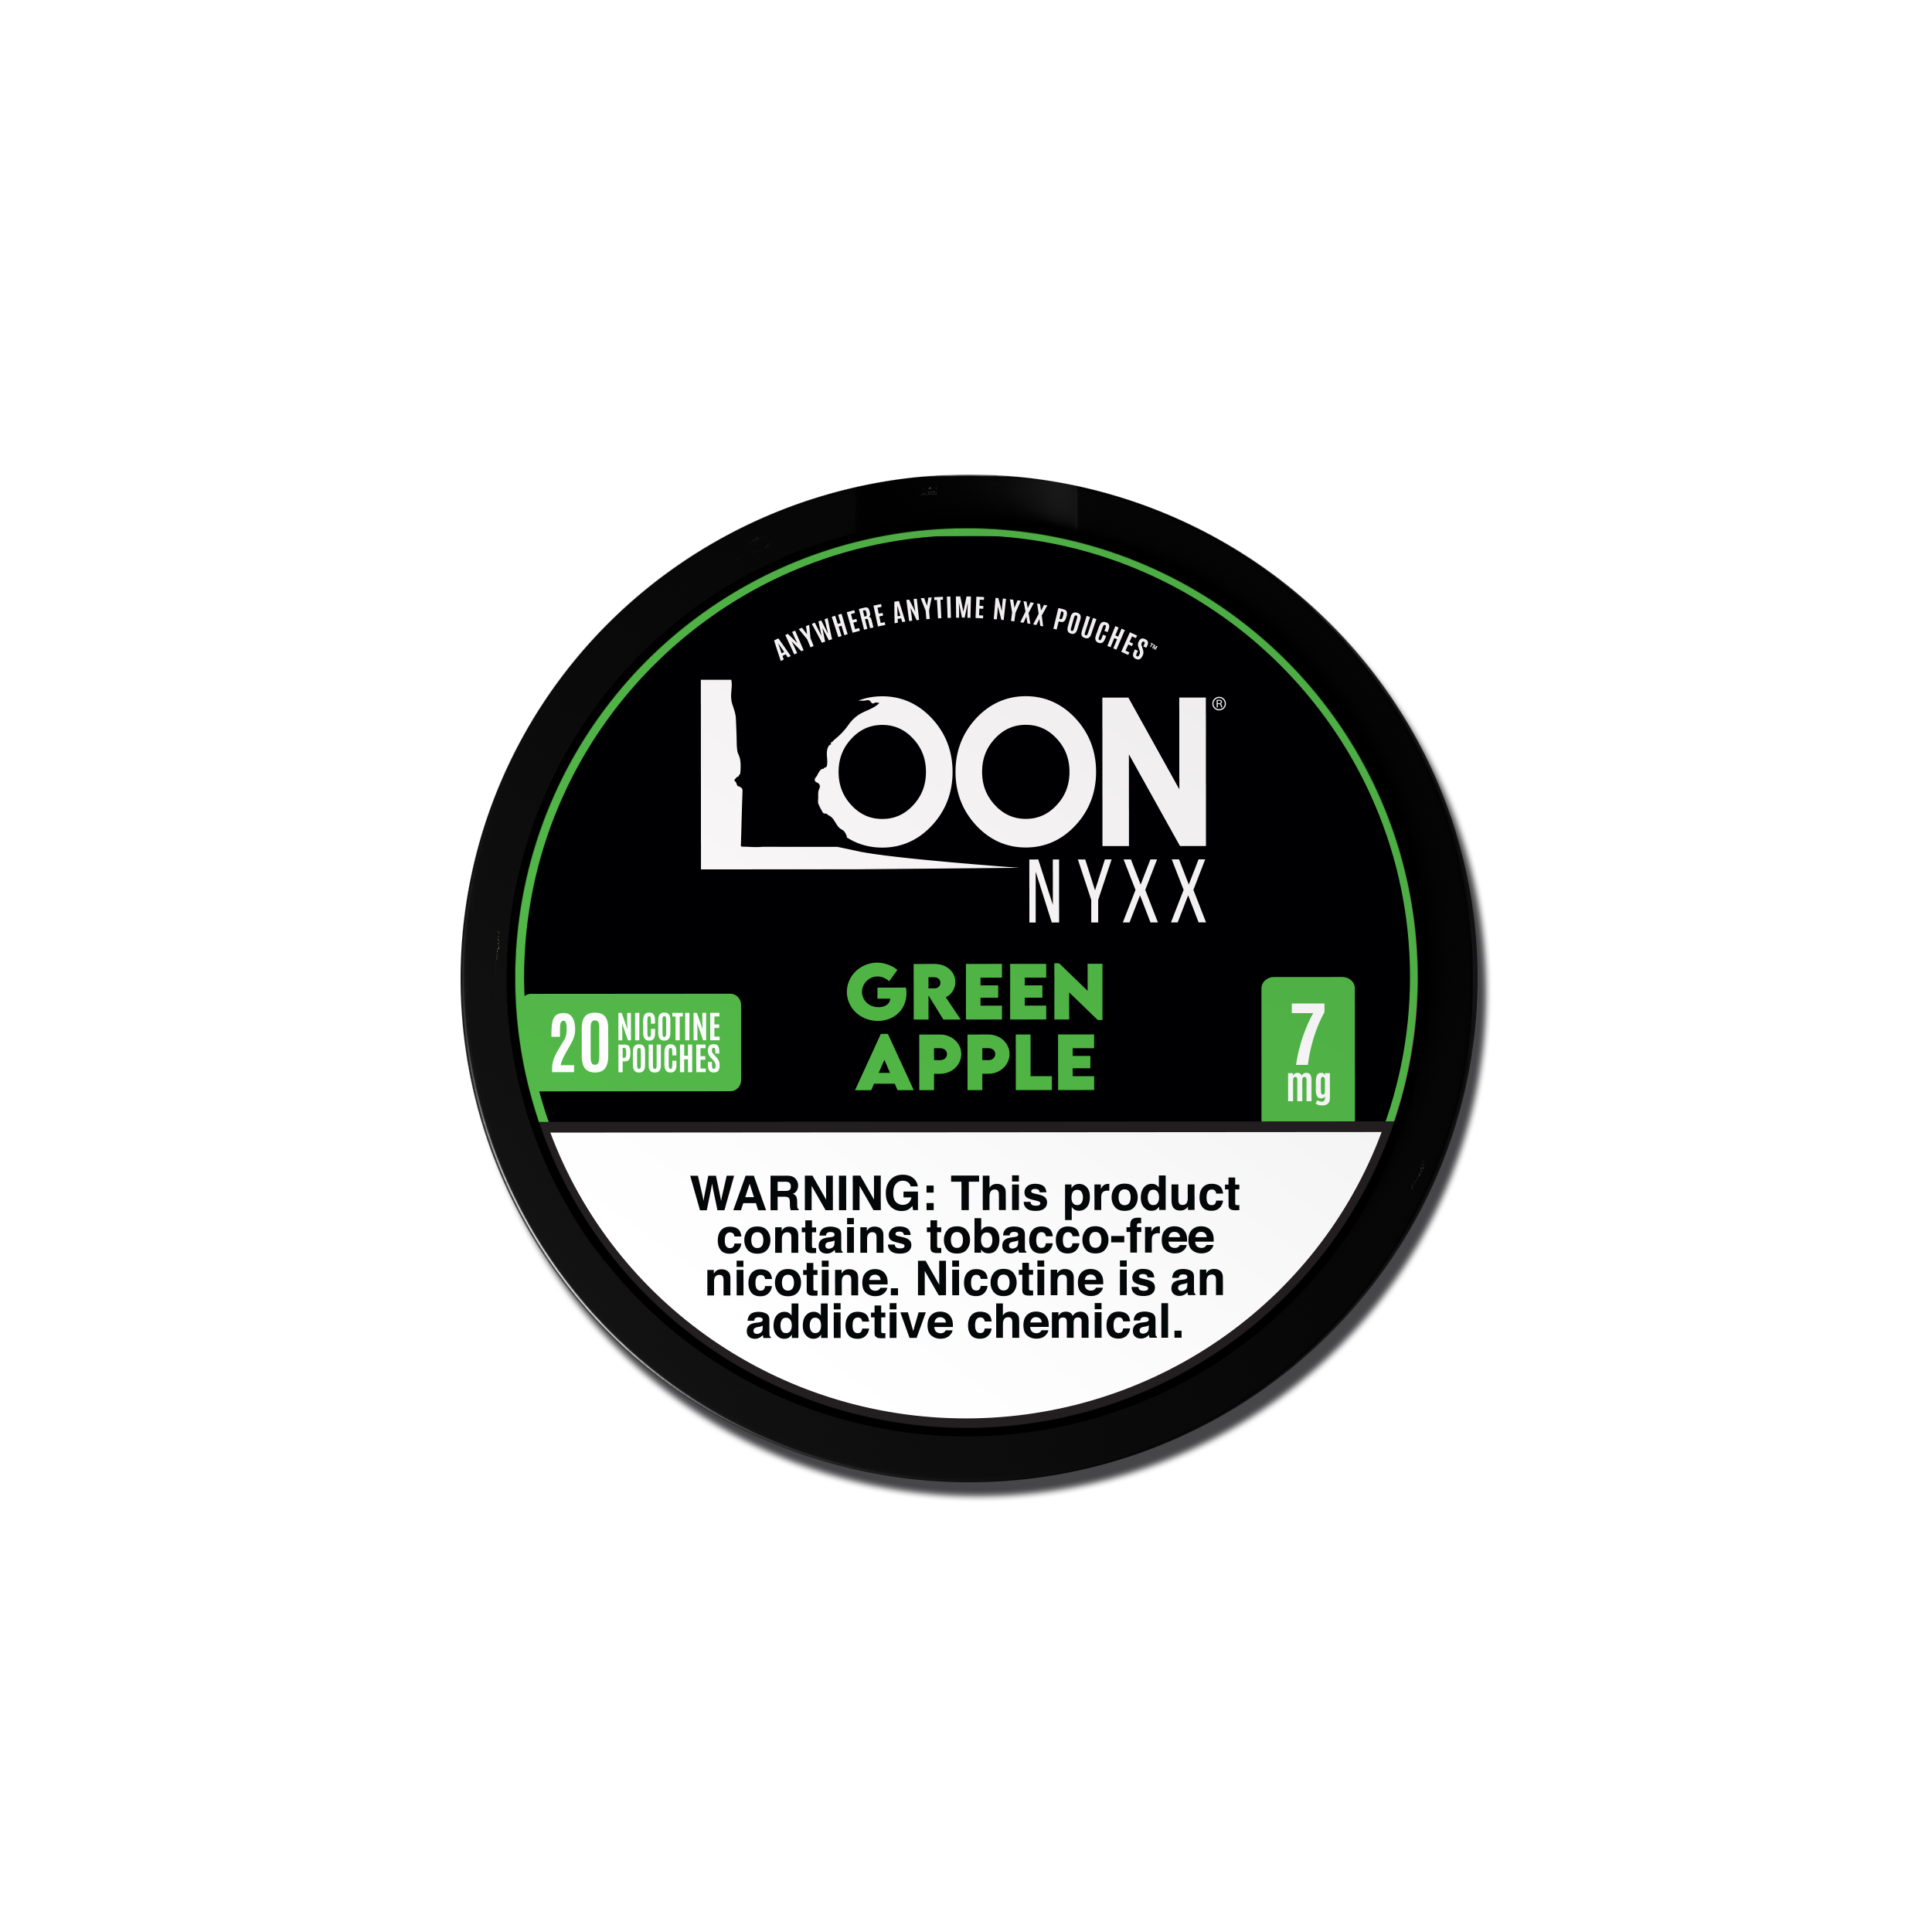 LOON NYXX - GREEN APPLE – The Loon